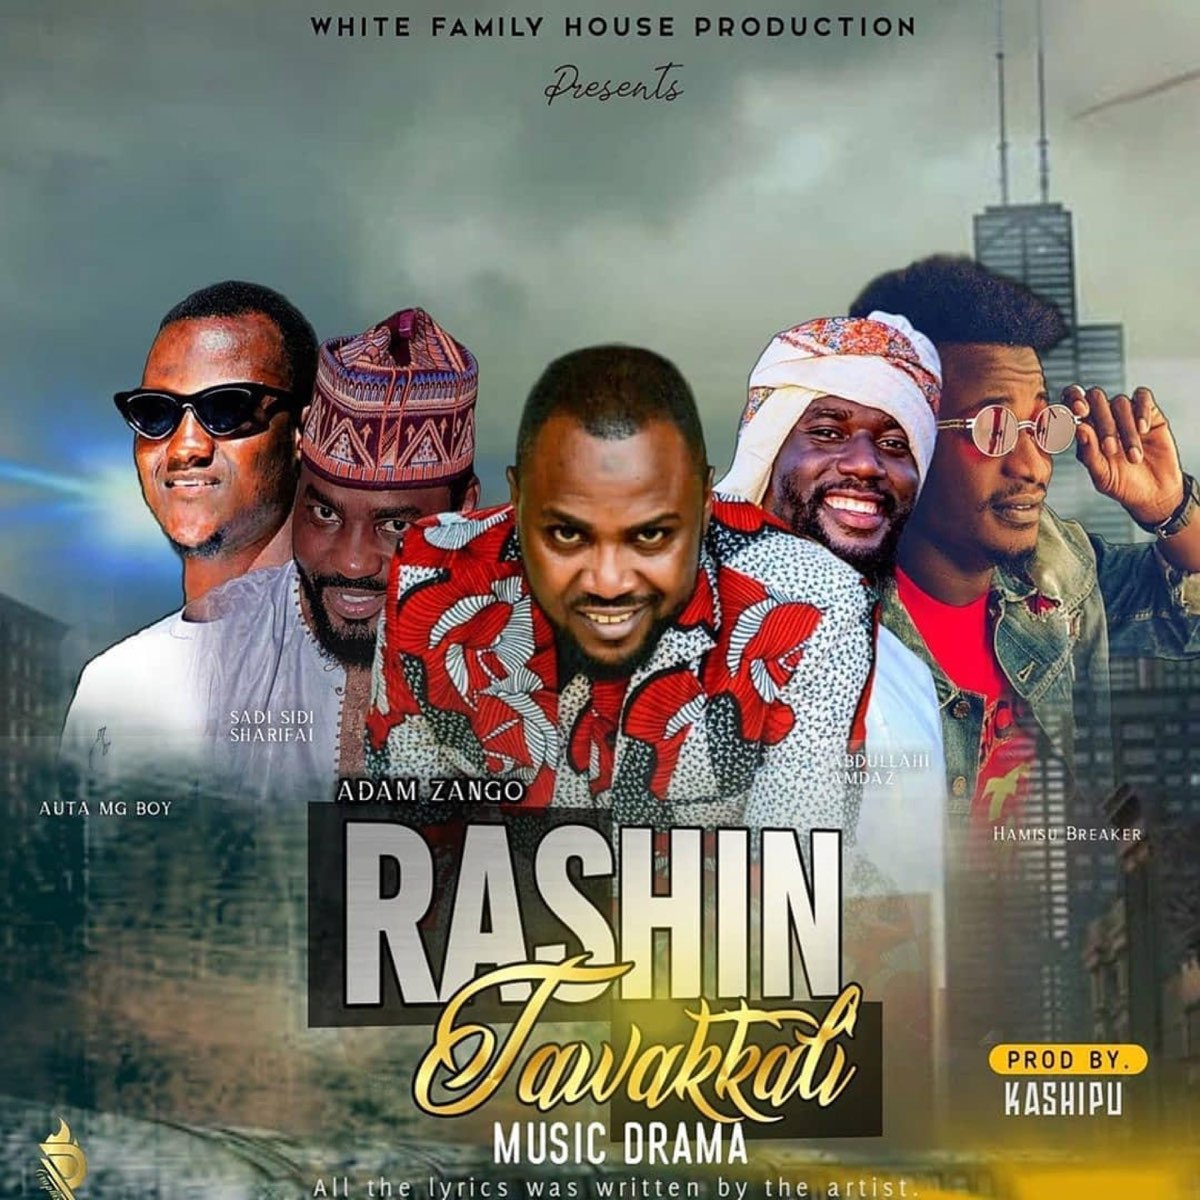 Rashin Tawakkali (feat. Adam a zango, Hamisu Breaker, Sadi Sidi & Auta Mg Boy) - EP by Abdallah Amdaz on Apple Music